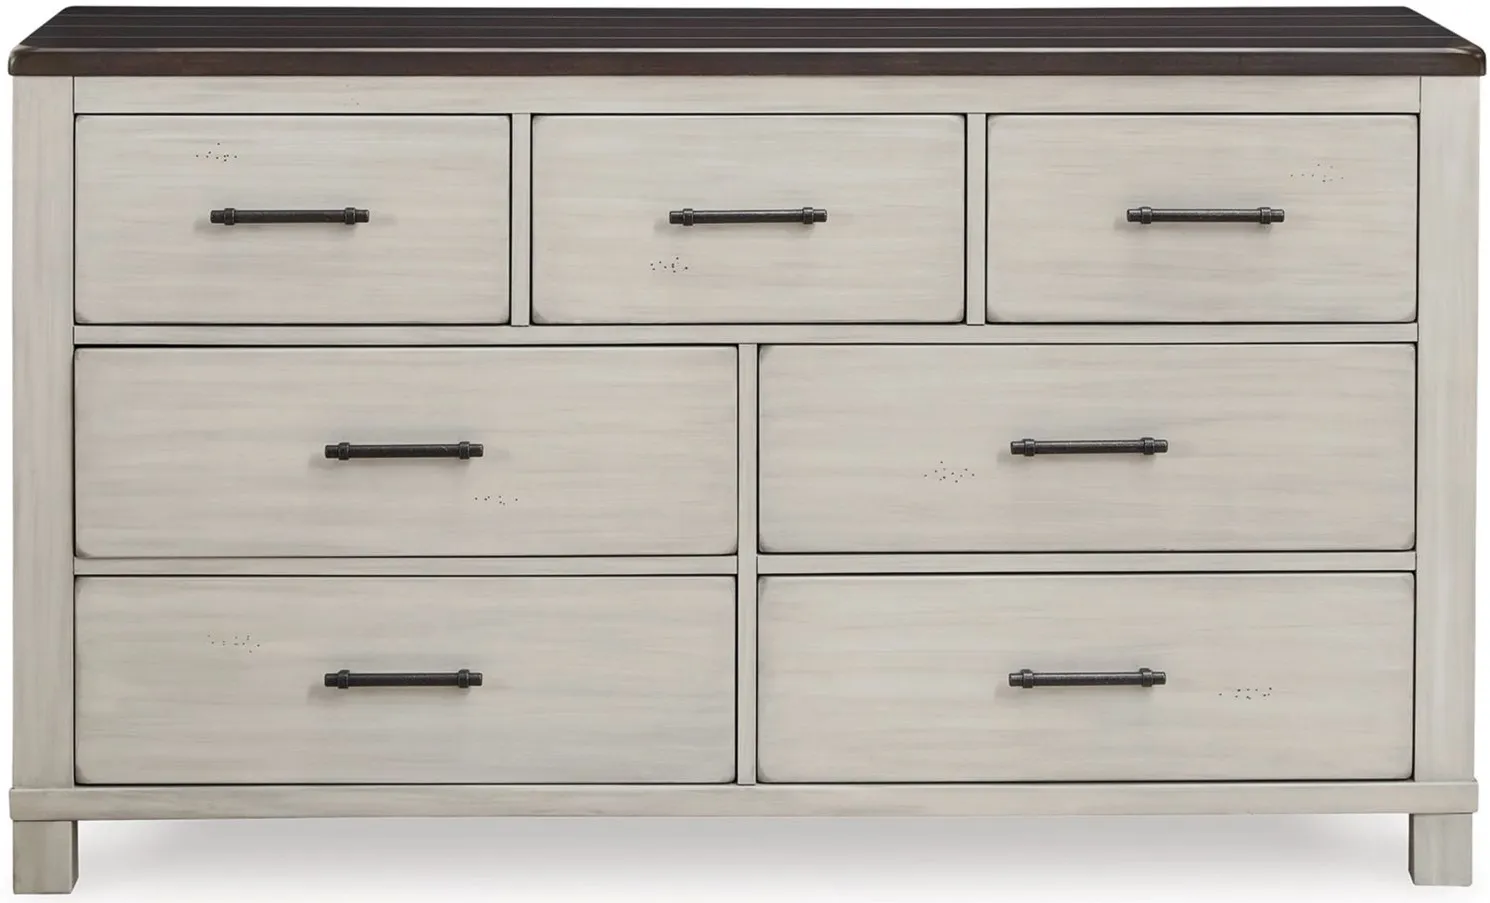 Darborn Dresser in Gray/Brown by Ashley Furniture